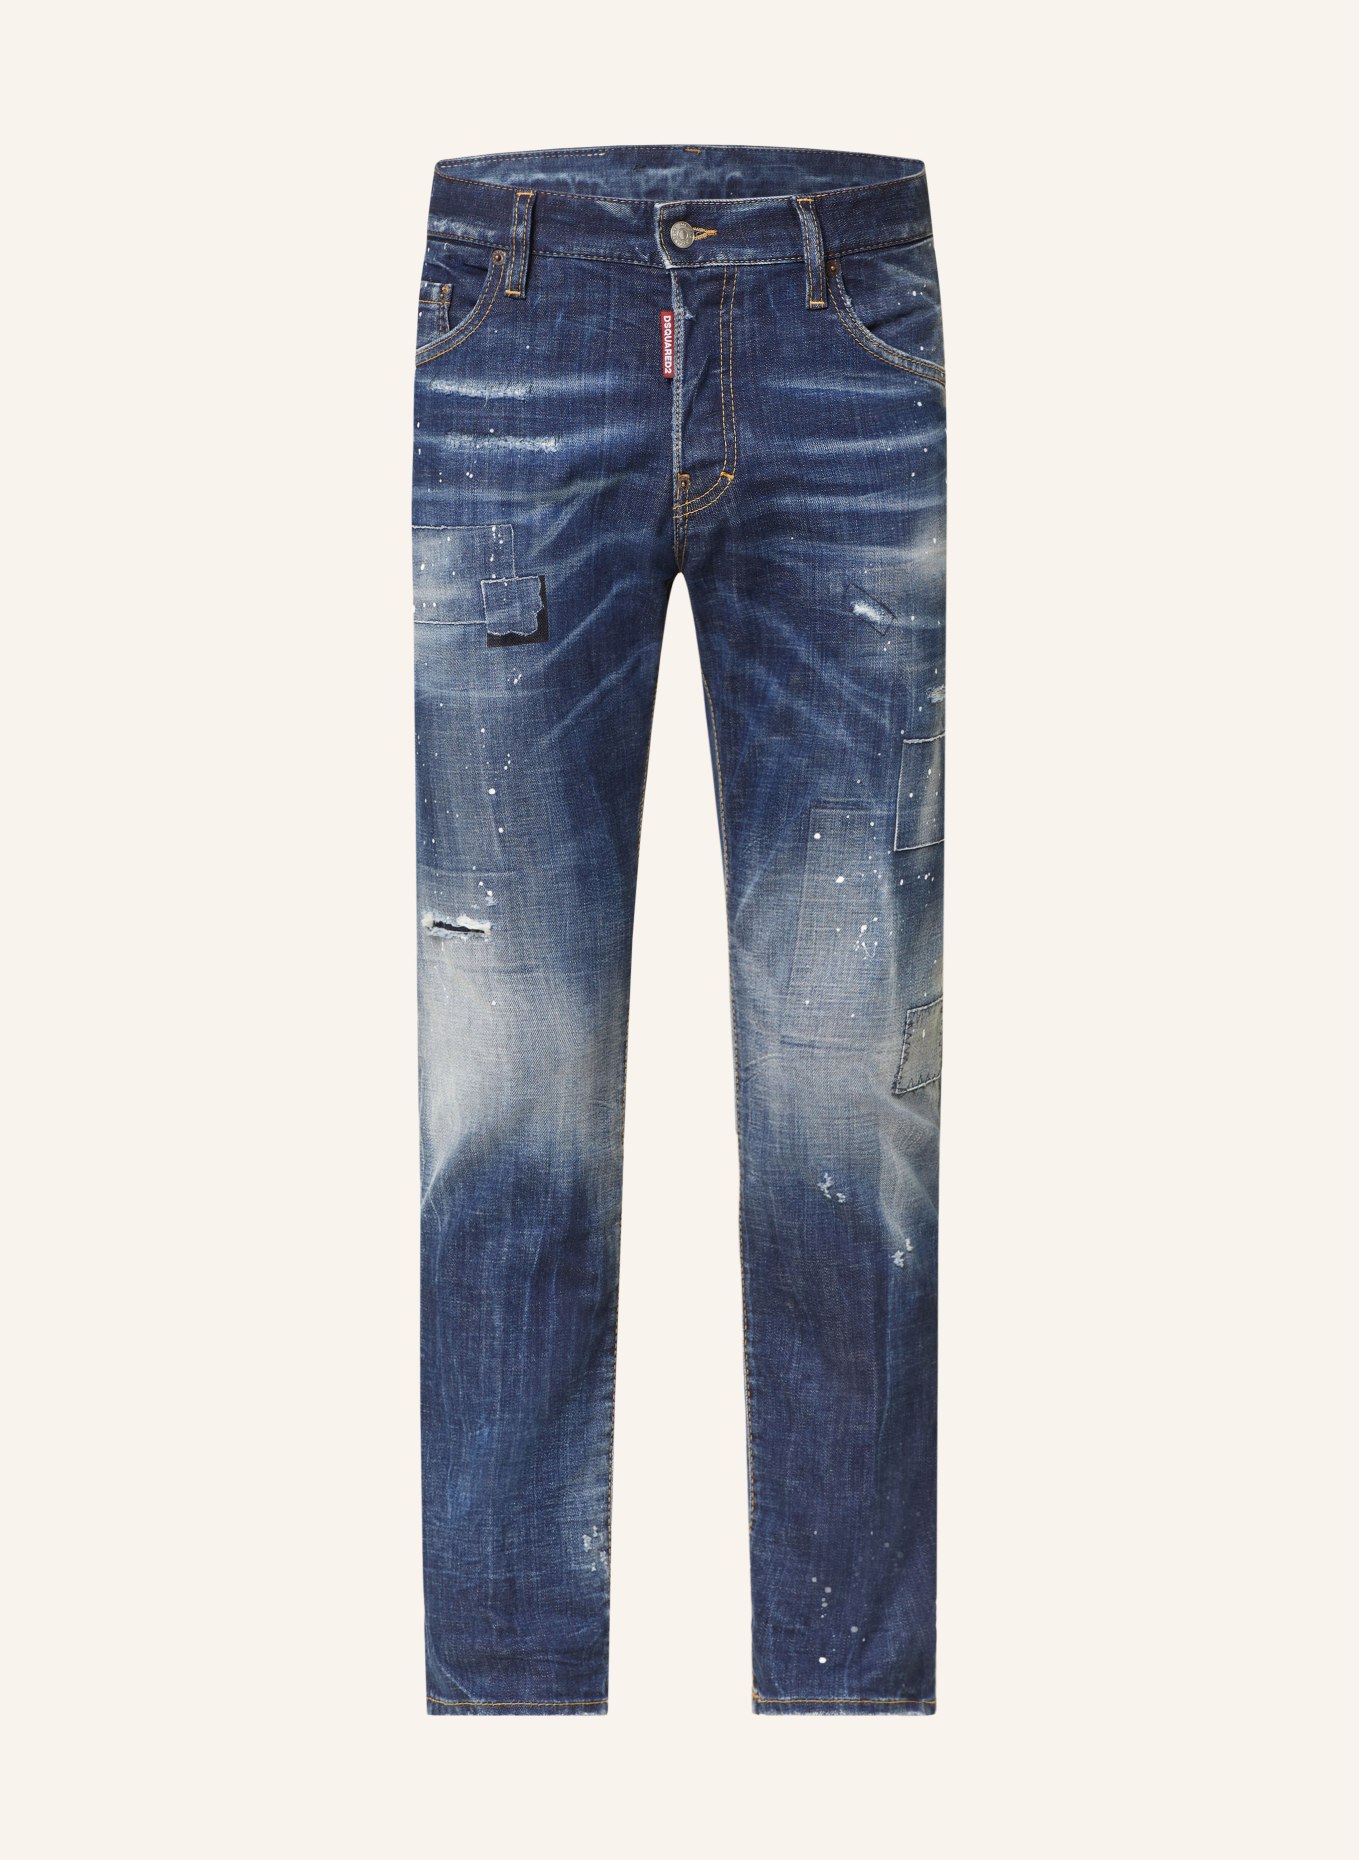 DSQUARED2 Jeans SKATER Slim Fit, Farbe: 470 NAVY BLUE (Bild 1)